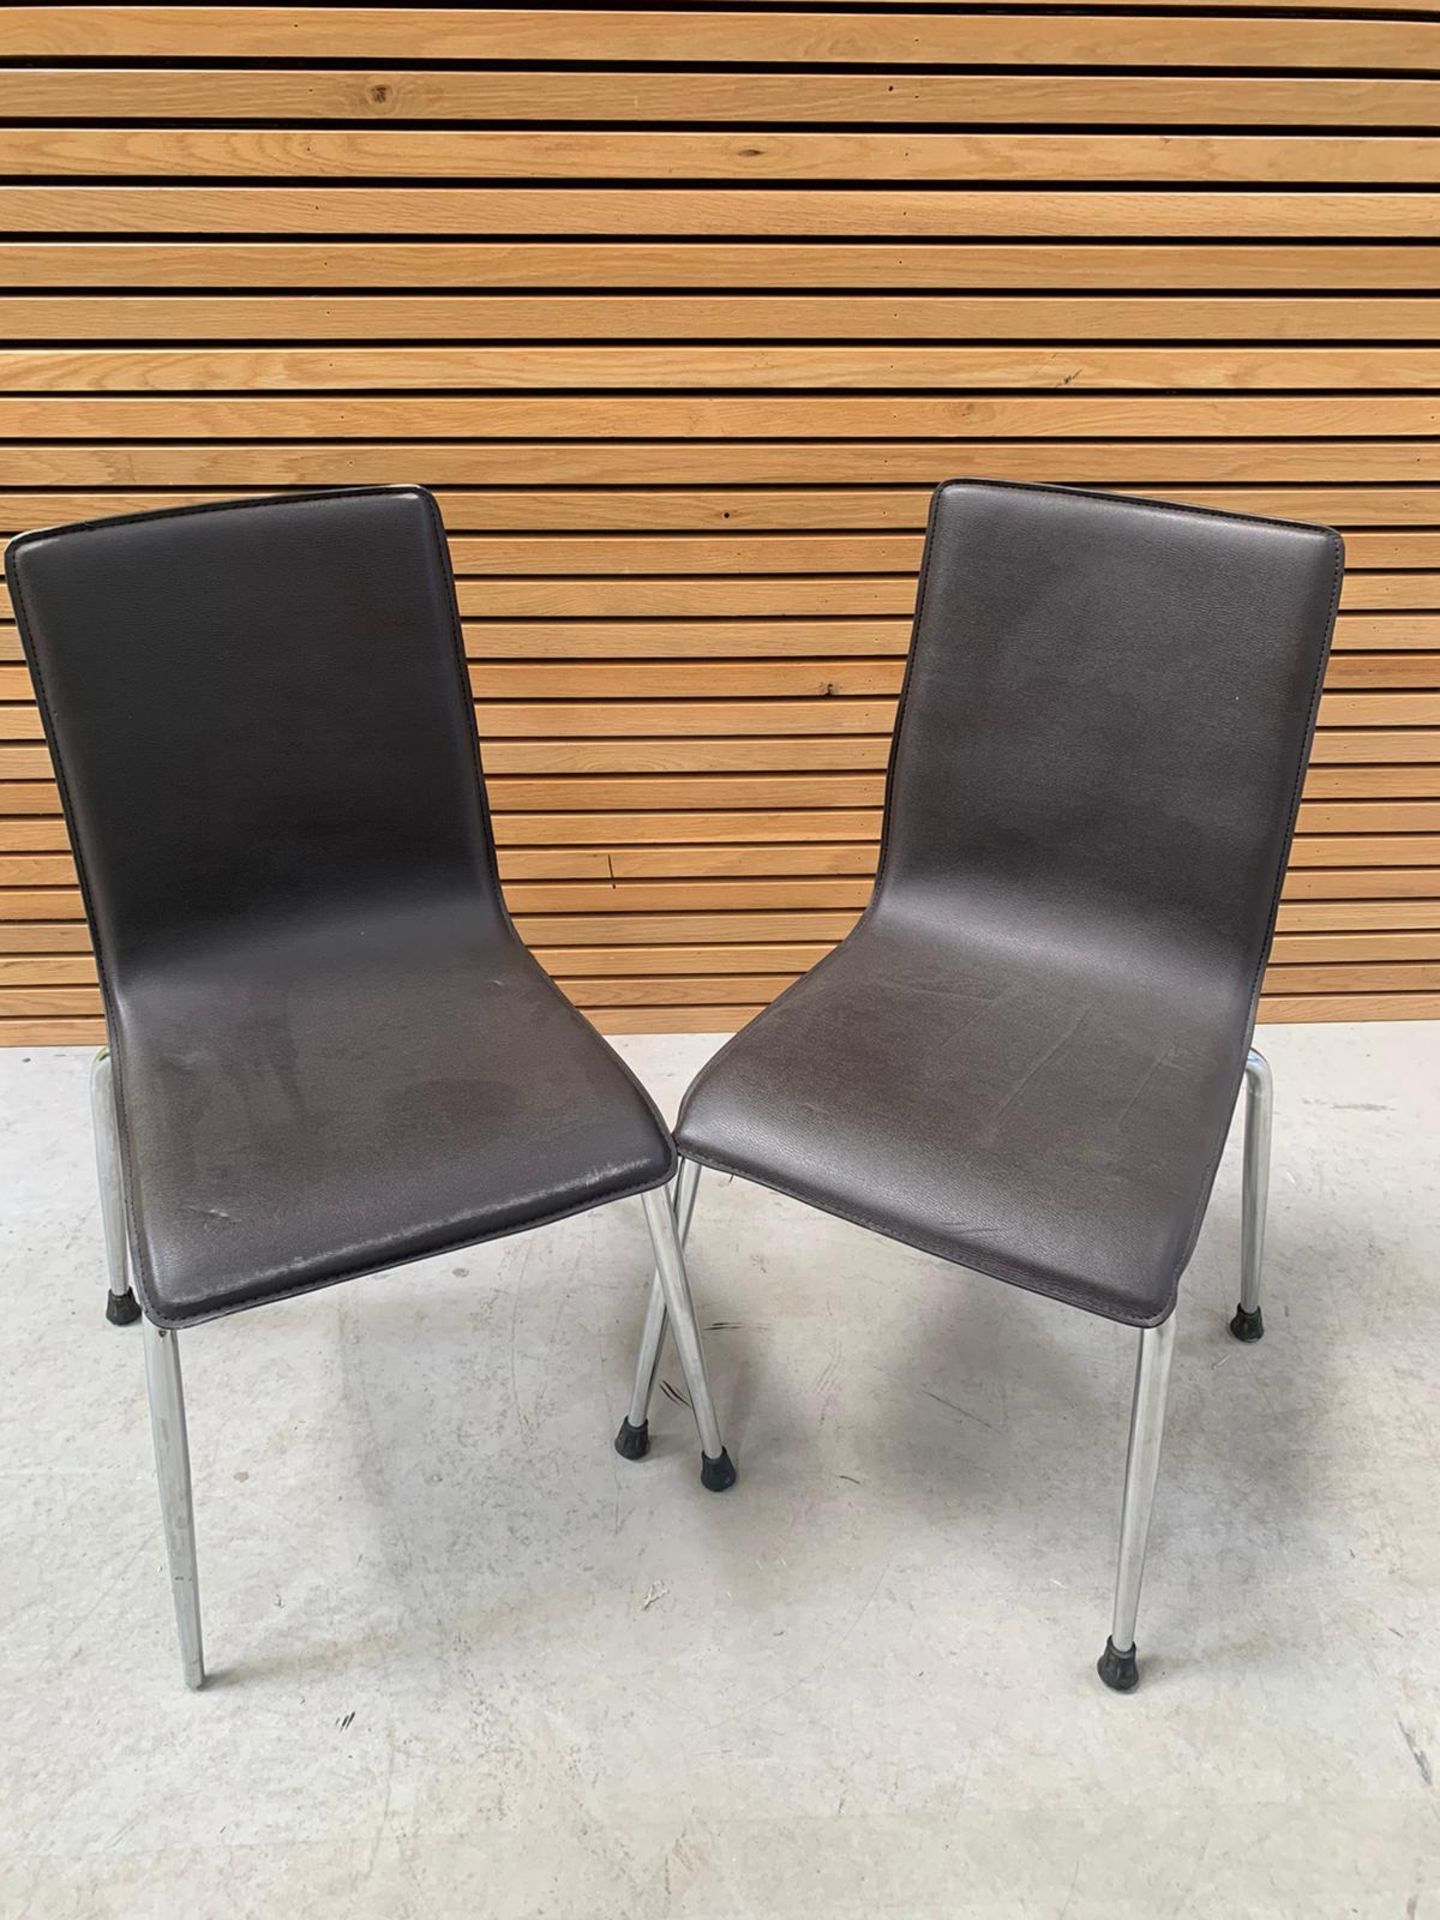 Set Of 2 Black Puma Chairs - Image 5 of 6